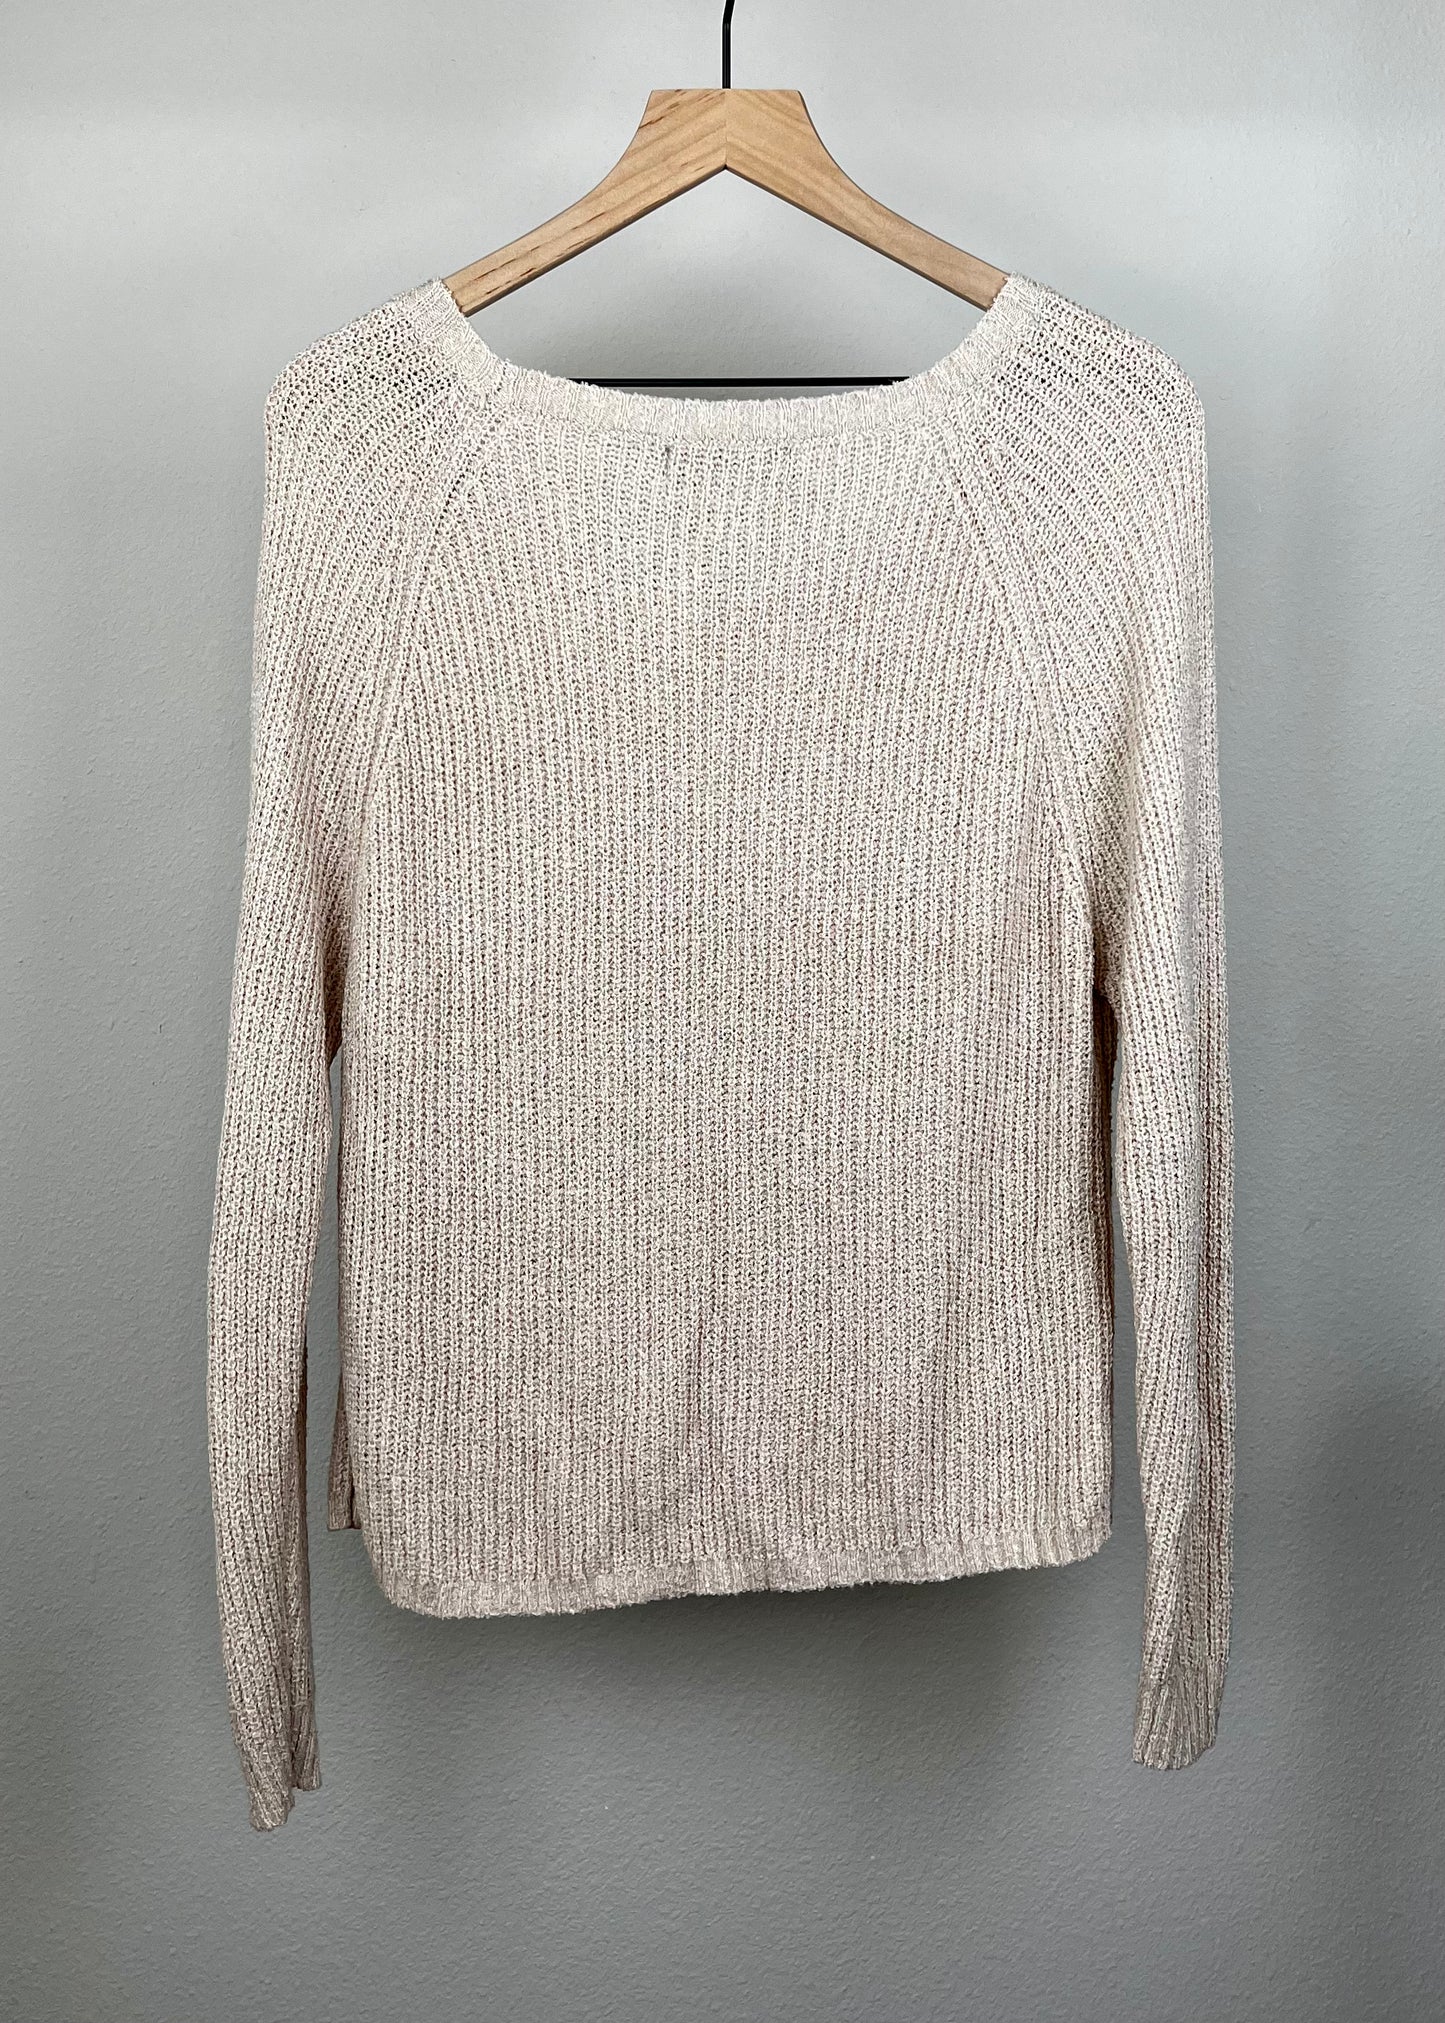 Lulus Tan Long Sleeve Sweater